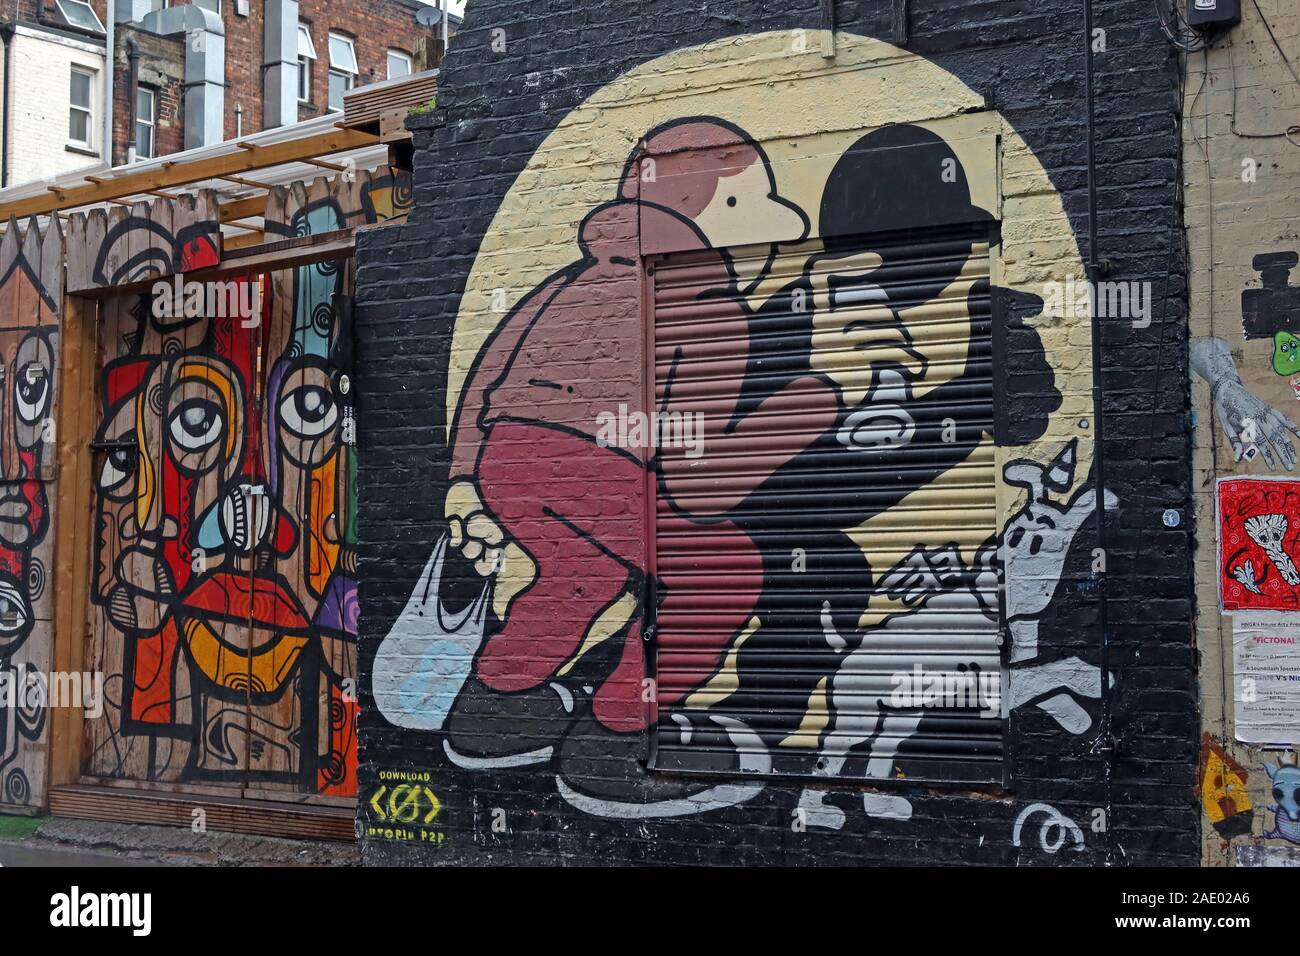 Hanbury St,Brick Lane,art and graffiti,Shoreditch,Tower Hamlets,East End,London,South East,England,UK, E1 6QL Stock Photo